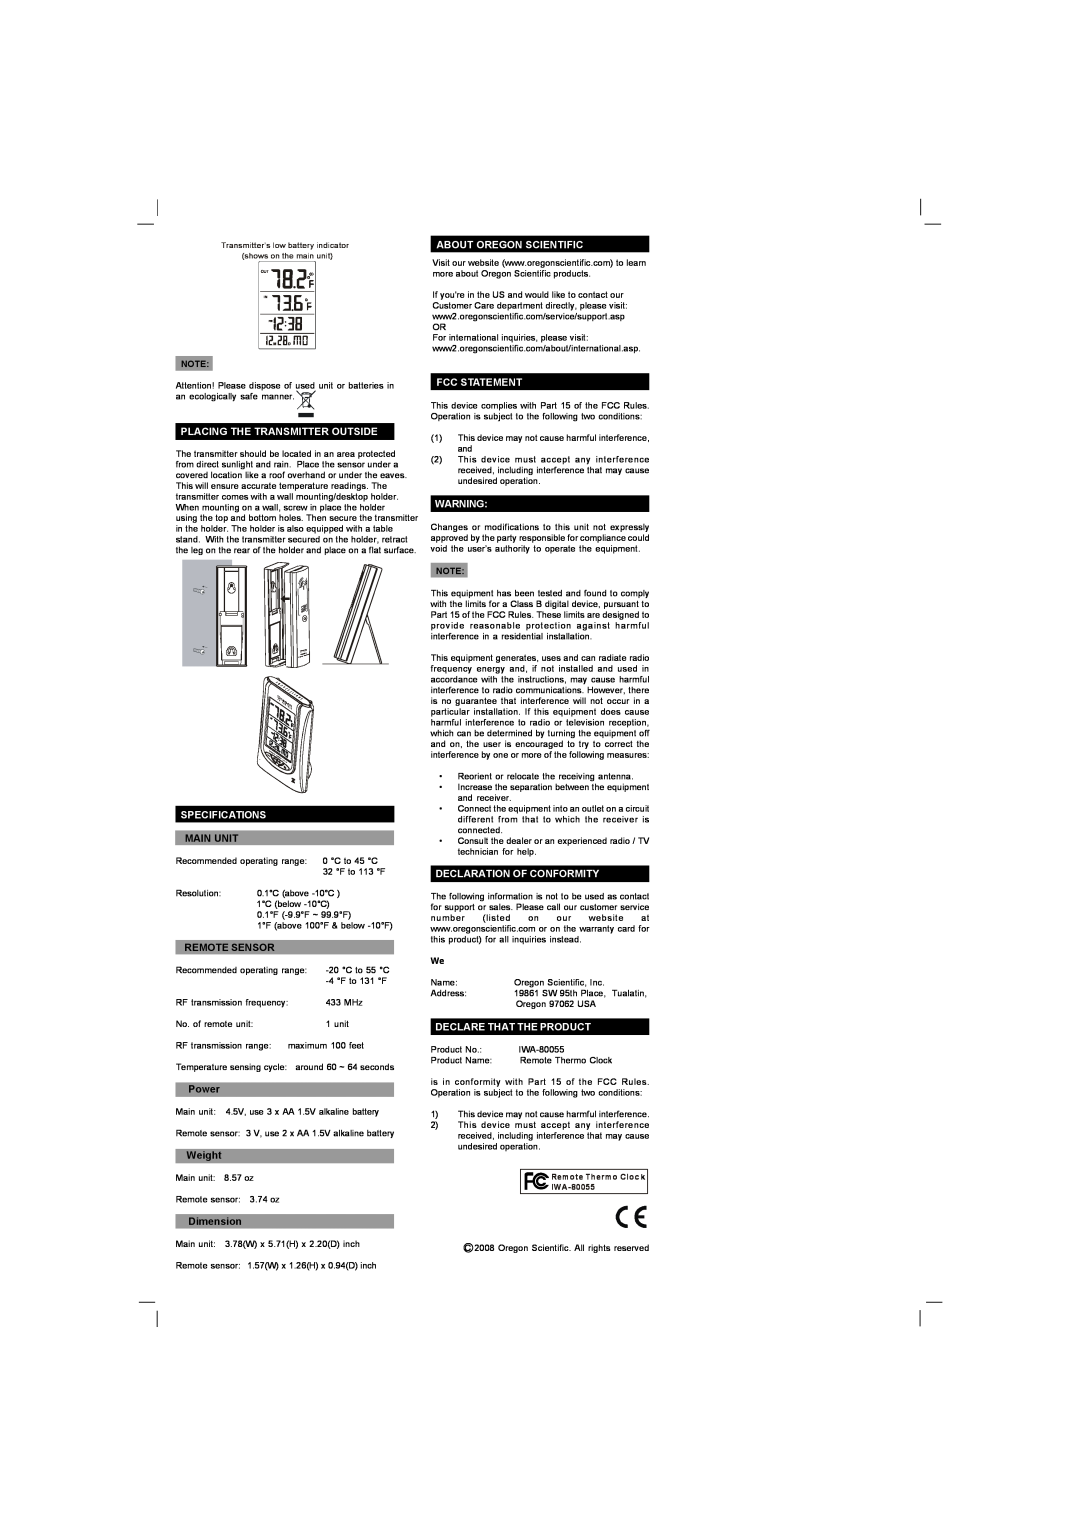 Oregon Scientific IWA-80055 manual Main Unit, Remote Sensor, Power, Weight, Dimension 